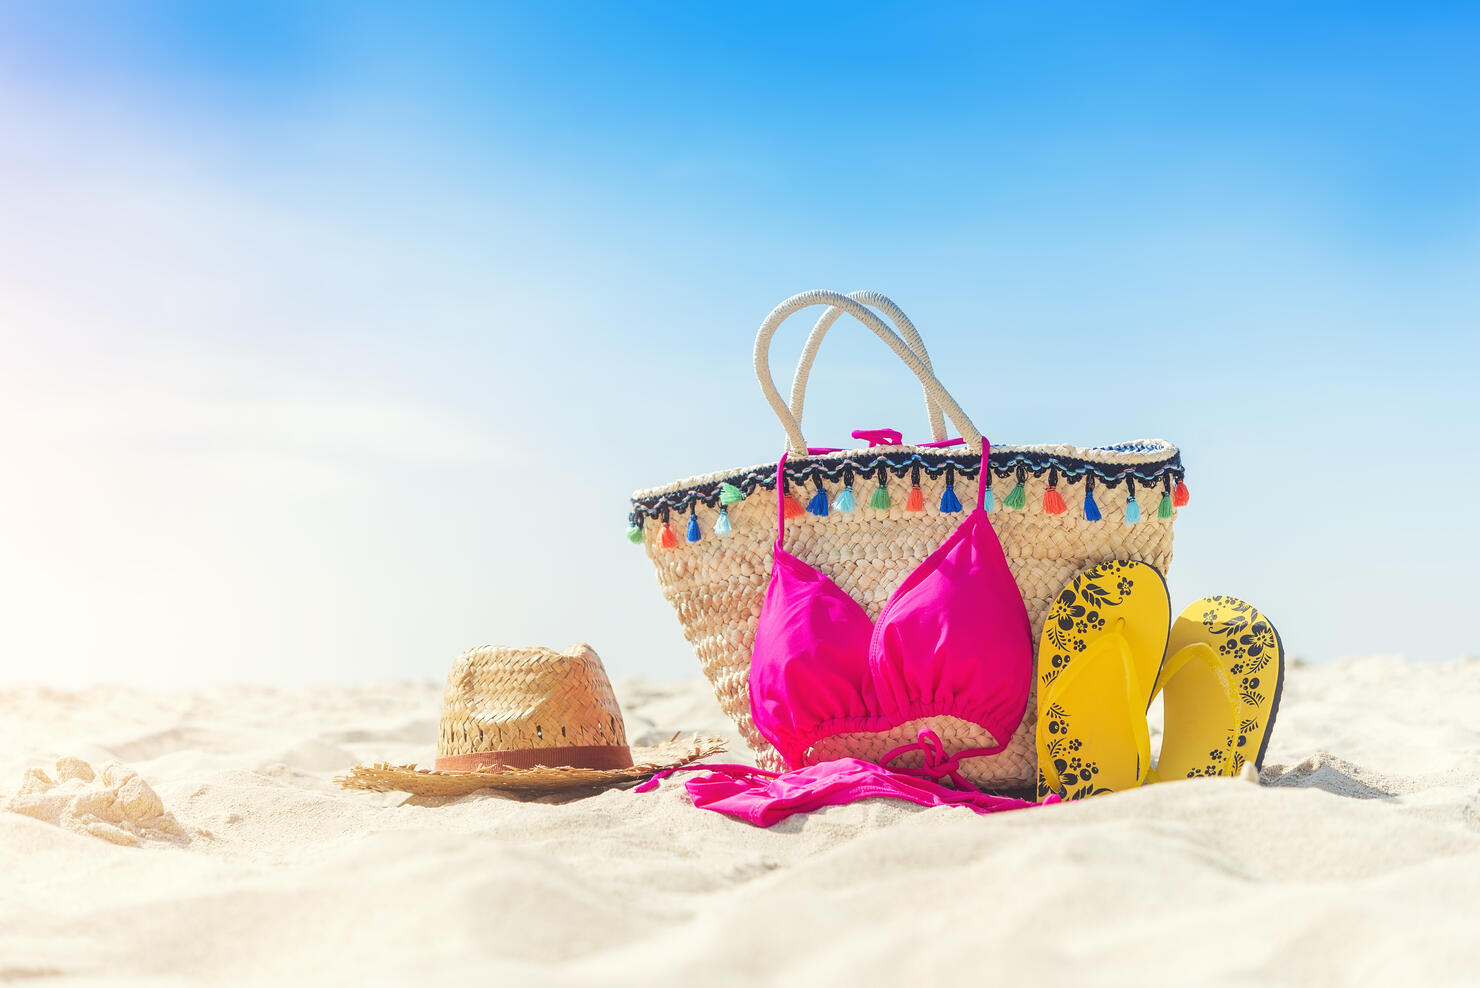 Popular Florida Beach Named The Best Nude Beach In The World | iHeart